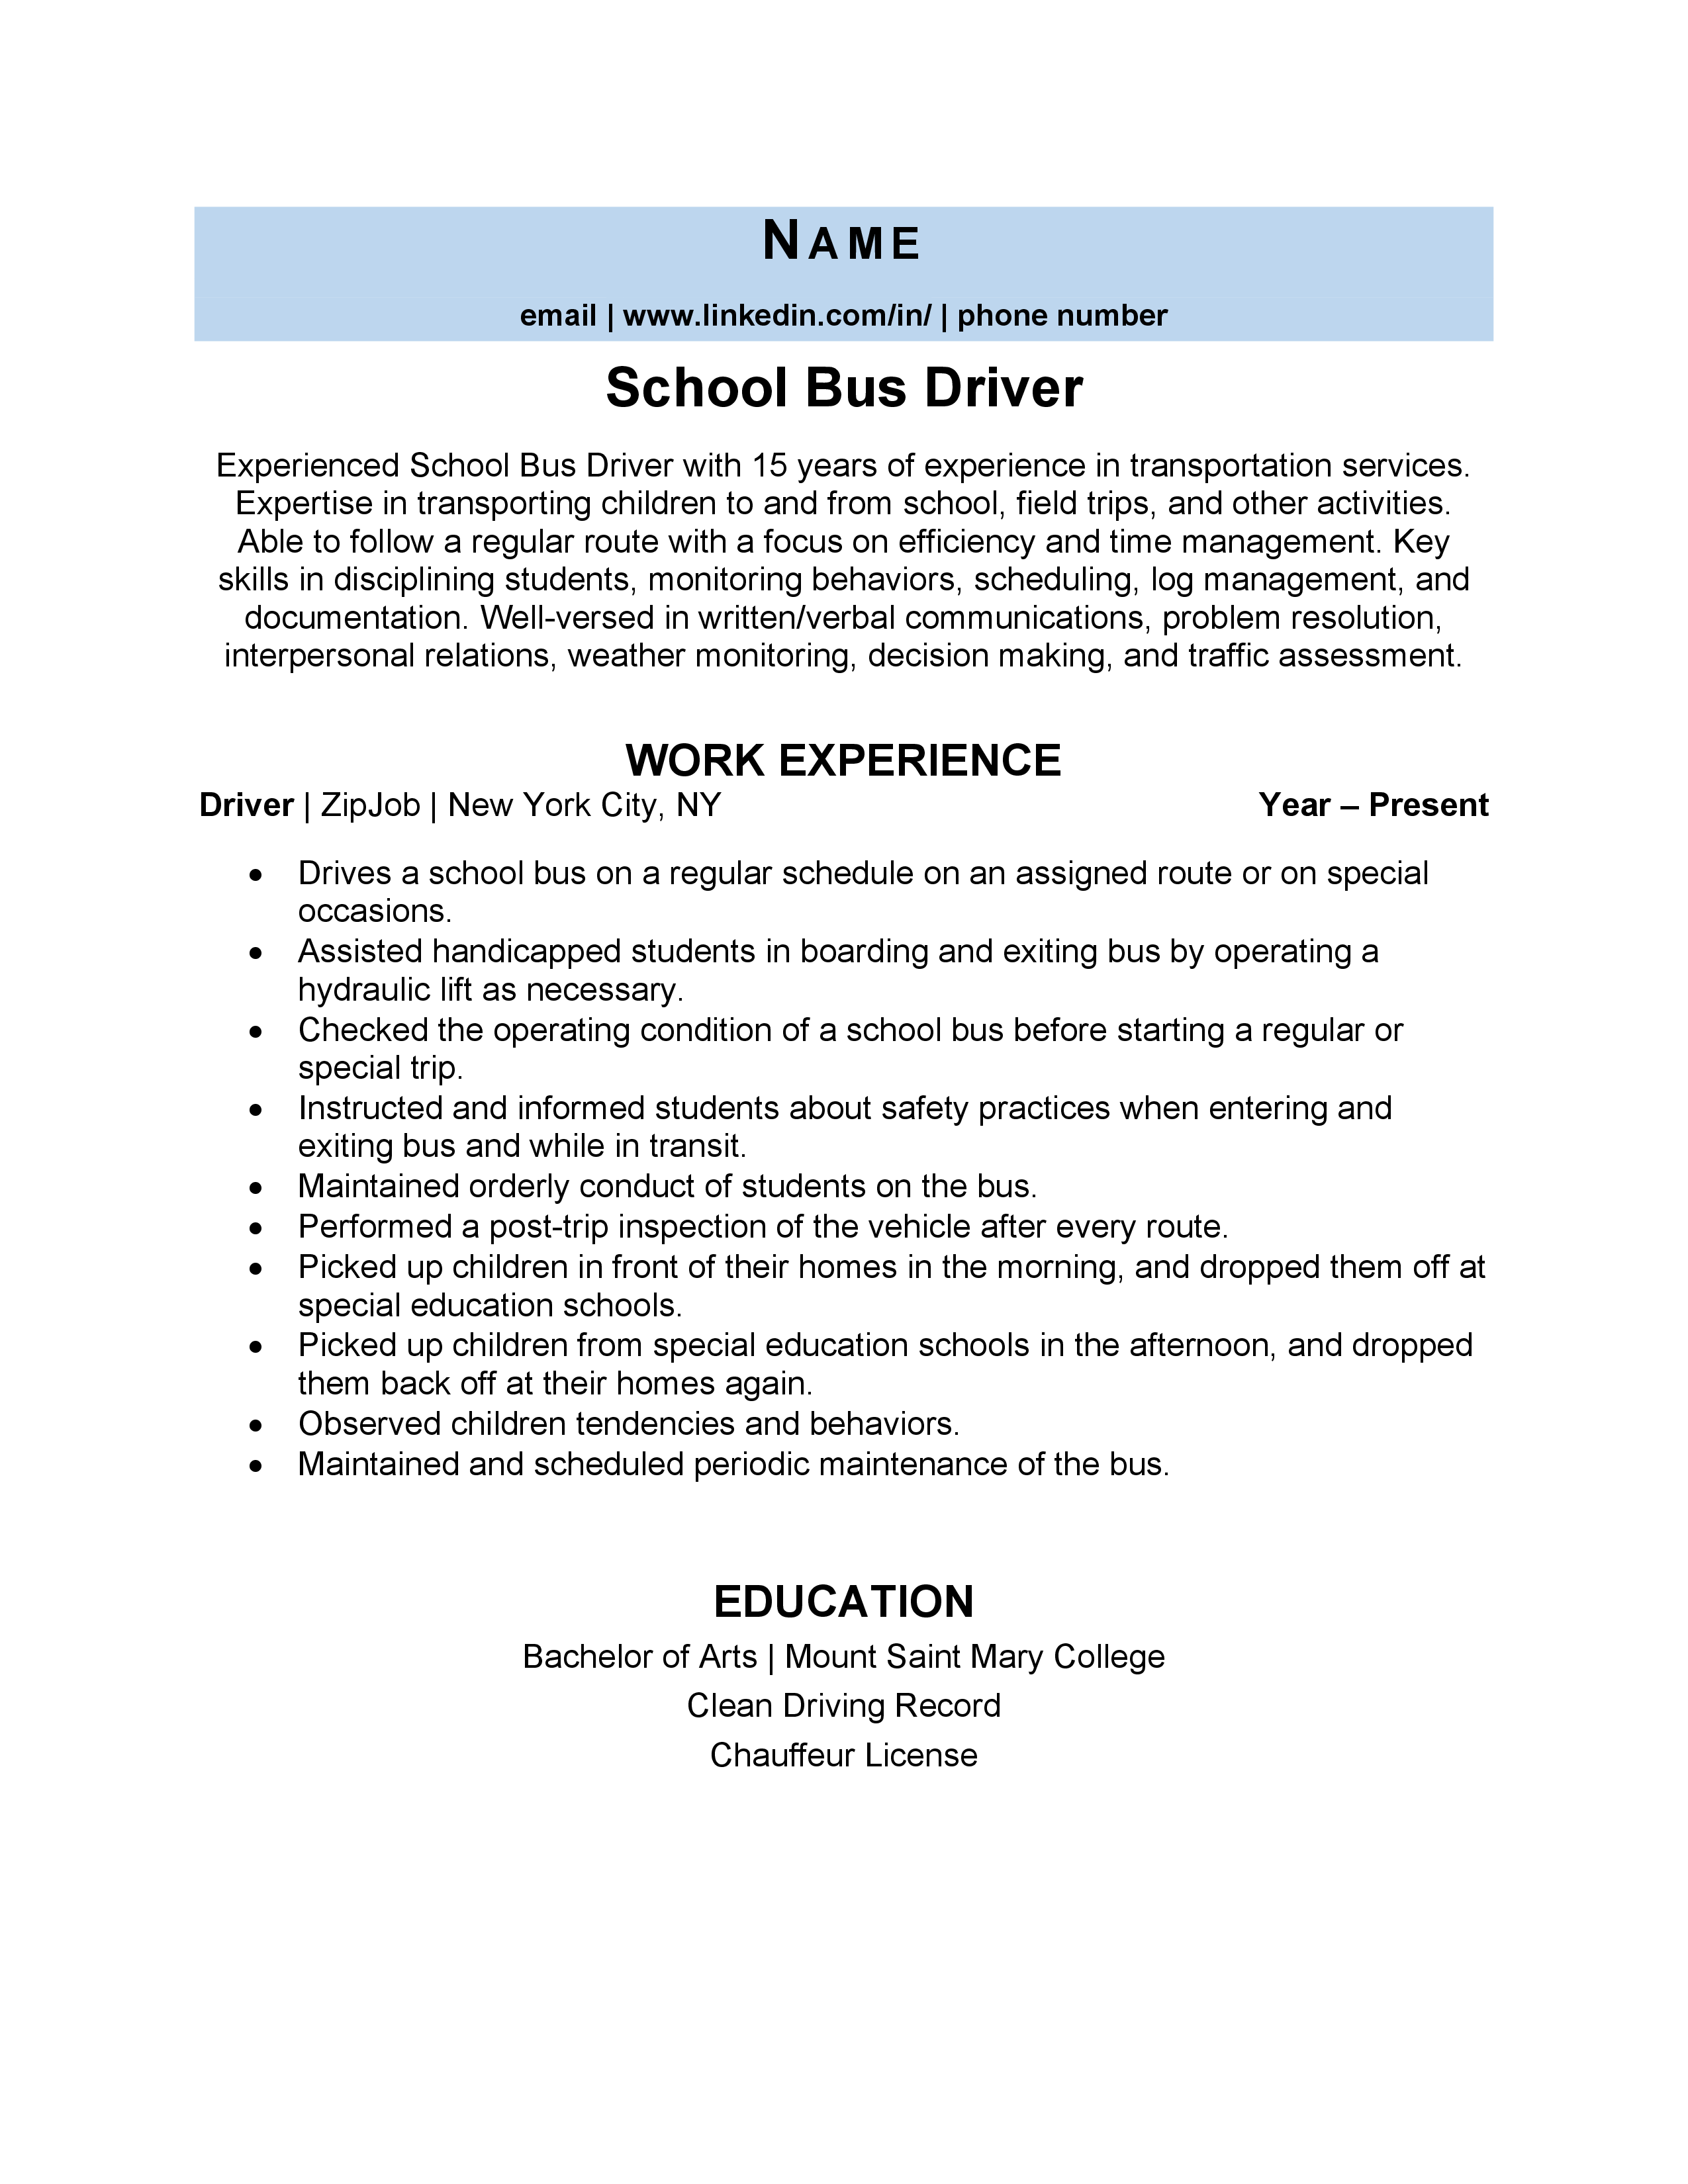 school bus driver job description resume